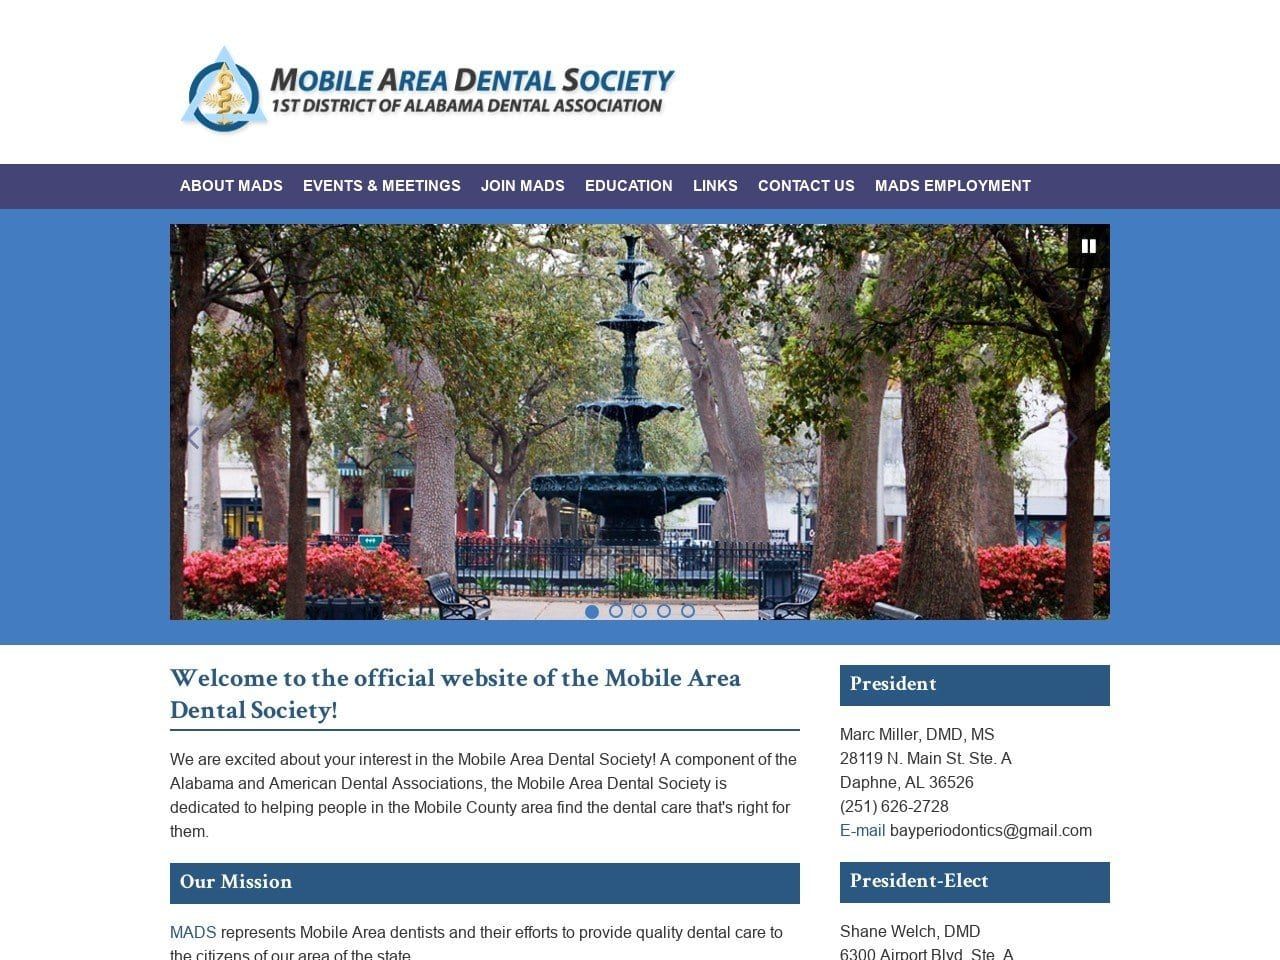 Mobilearea Dental Society Website Screenshot from mobileareadentalsociety.com